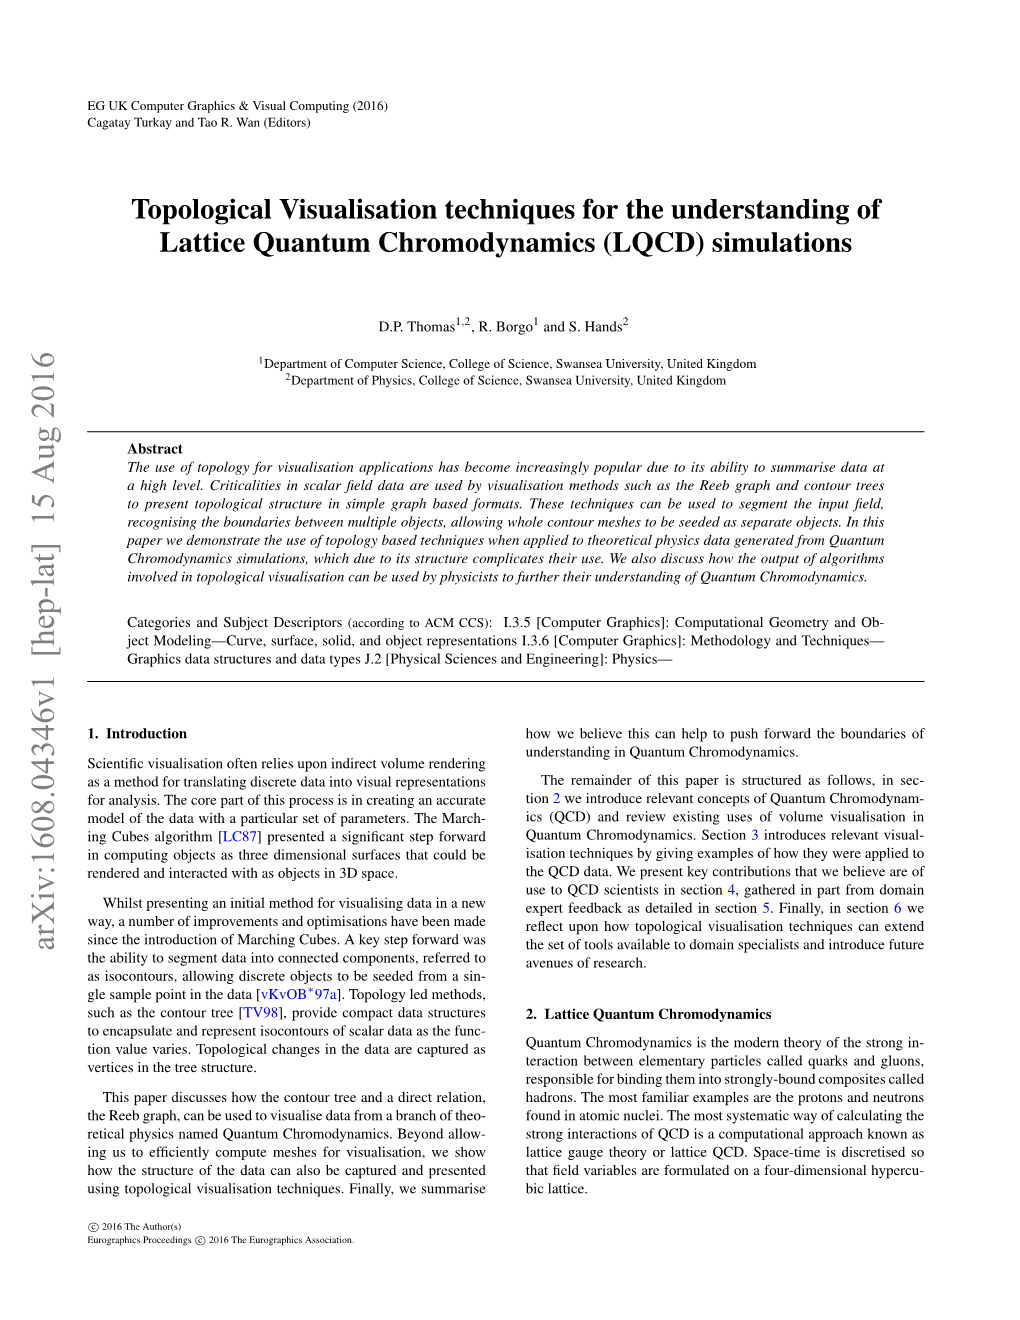 Topological Visualisation Techniques for the Understanding of Lattice Quantum Chromodynamics (LQCD) Simulations